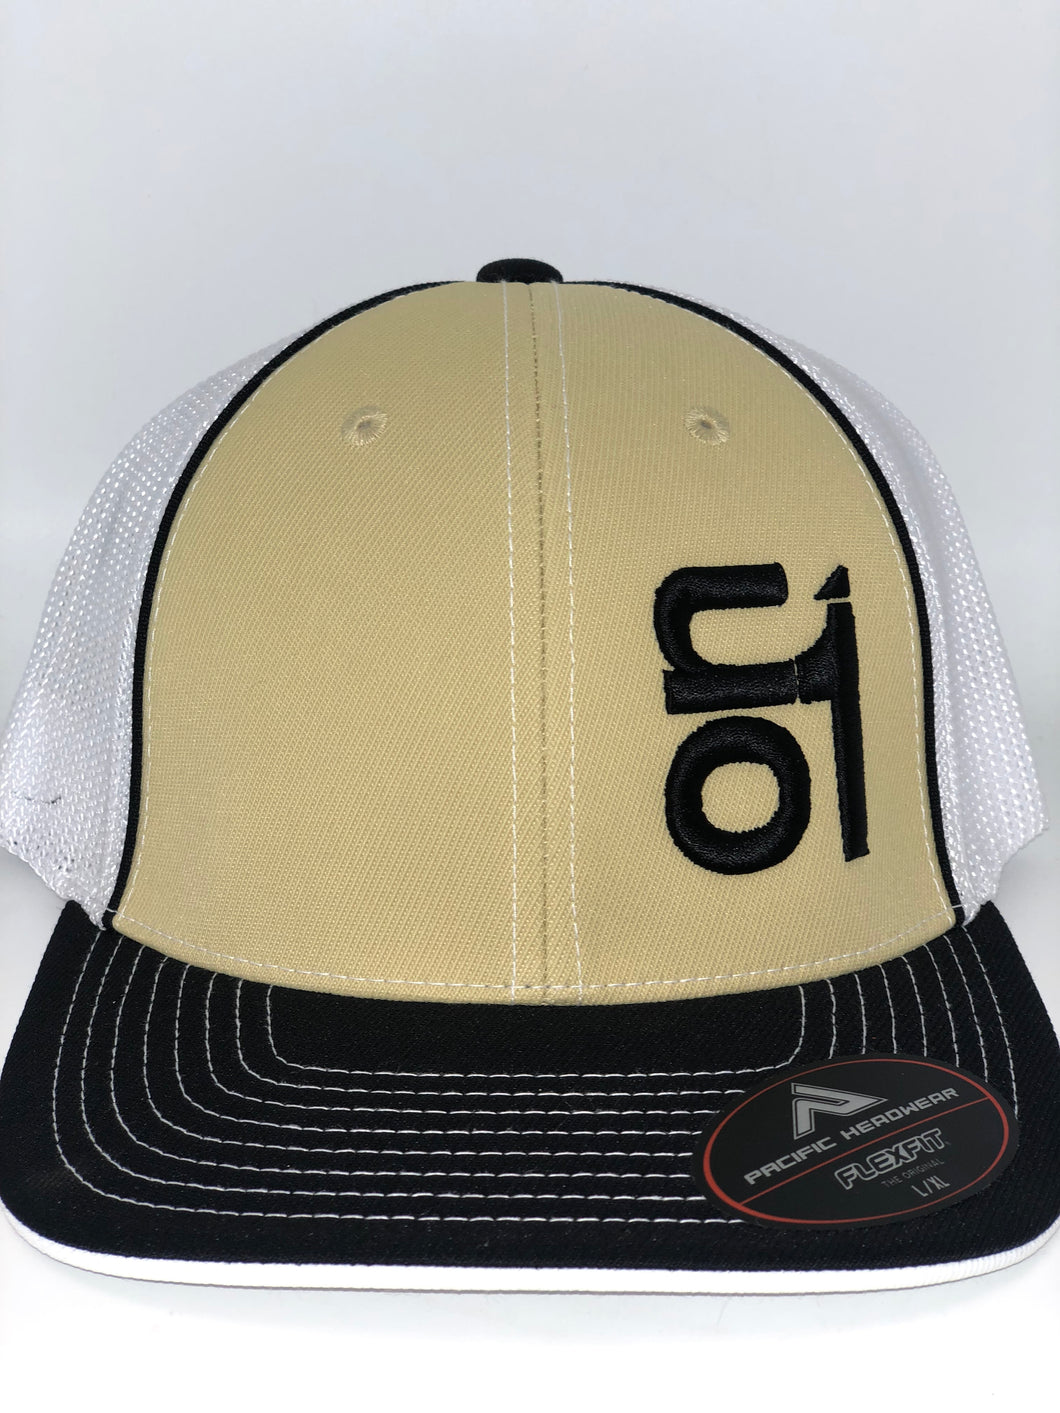 Black ON1 Logo- White Mesh/ Vegas Gold Crown/ Black Brim